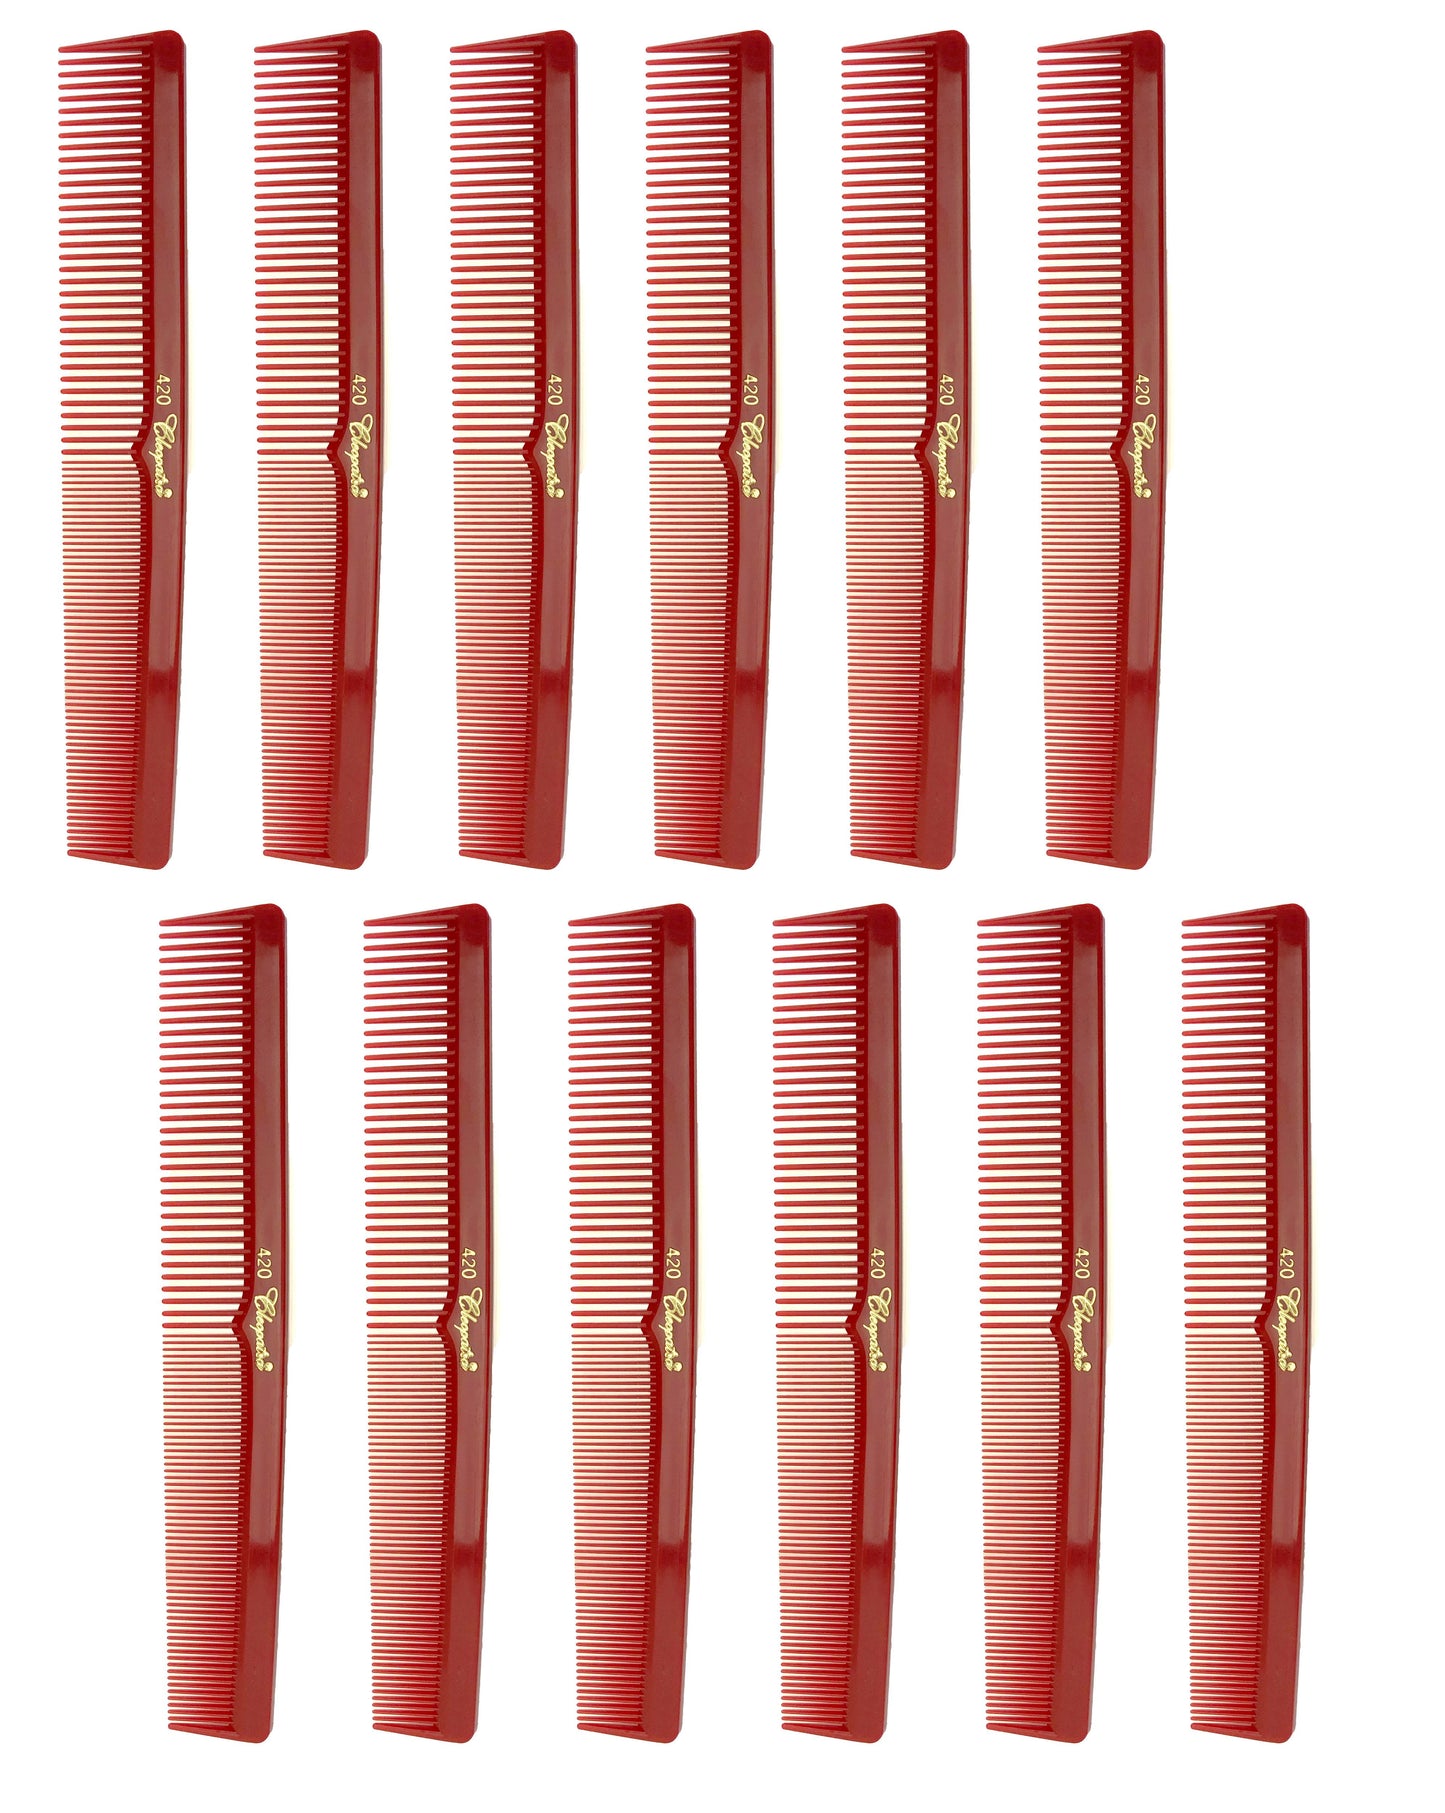 Krest Combs Cleopatra 420 Hair Cutting Combs. Barbers & Hair Stylist Combs 1 DZ.